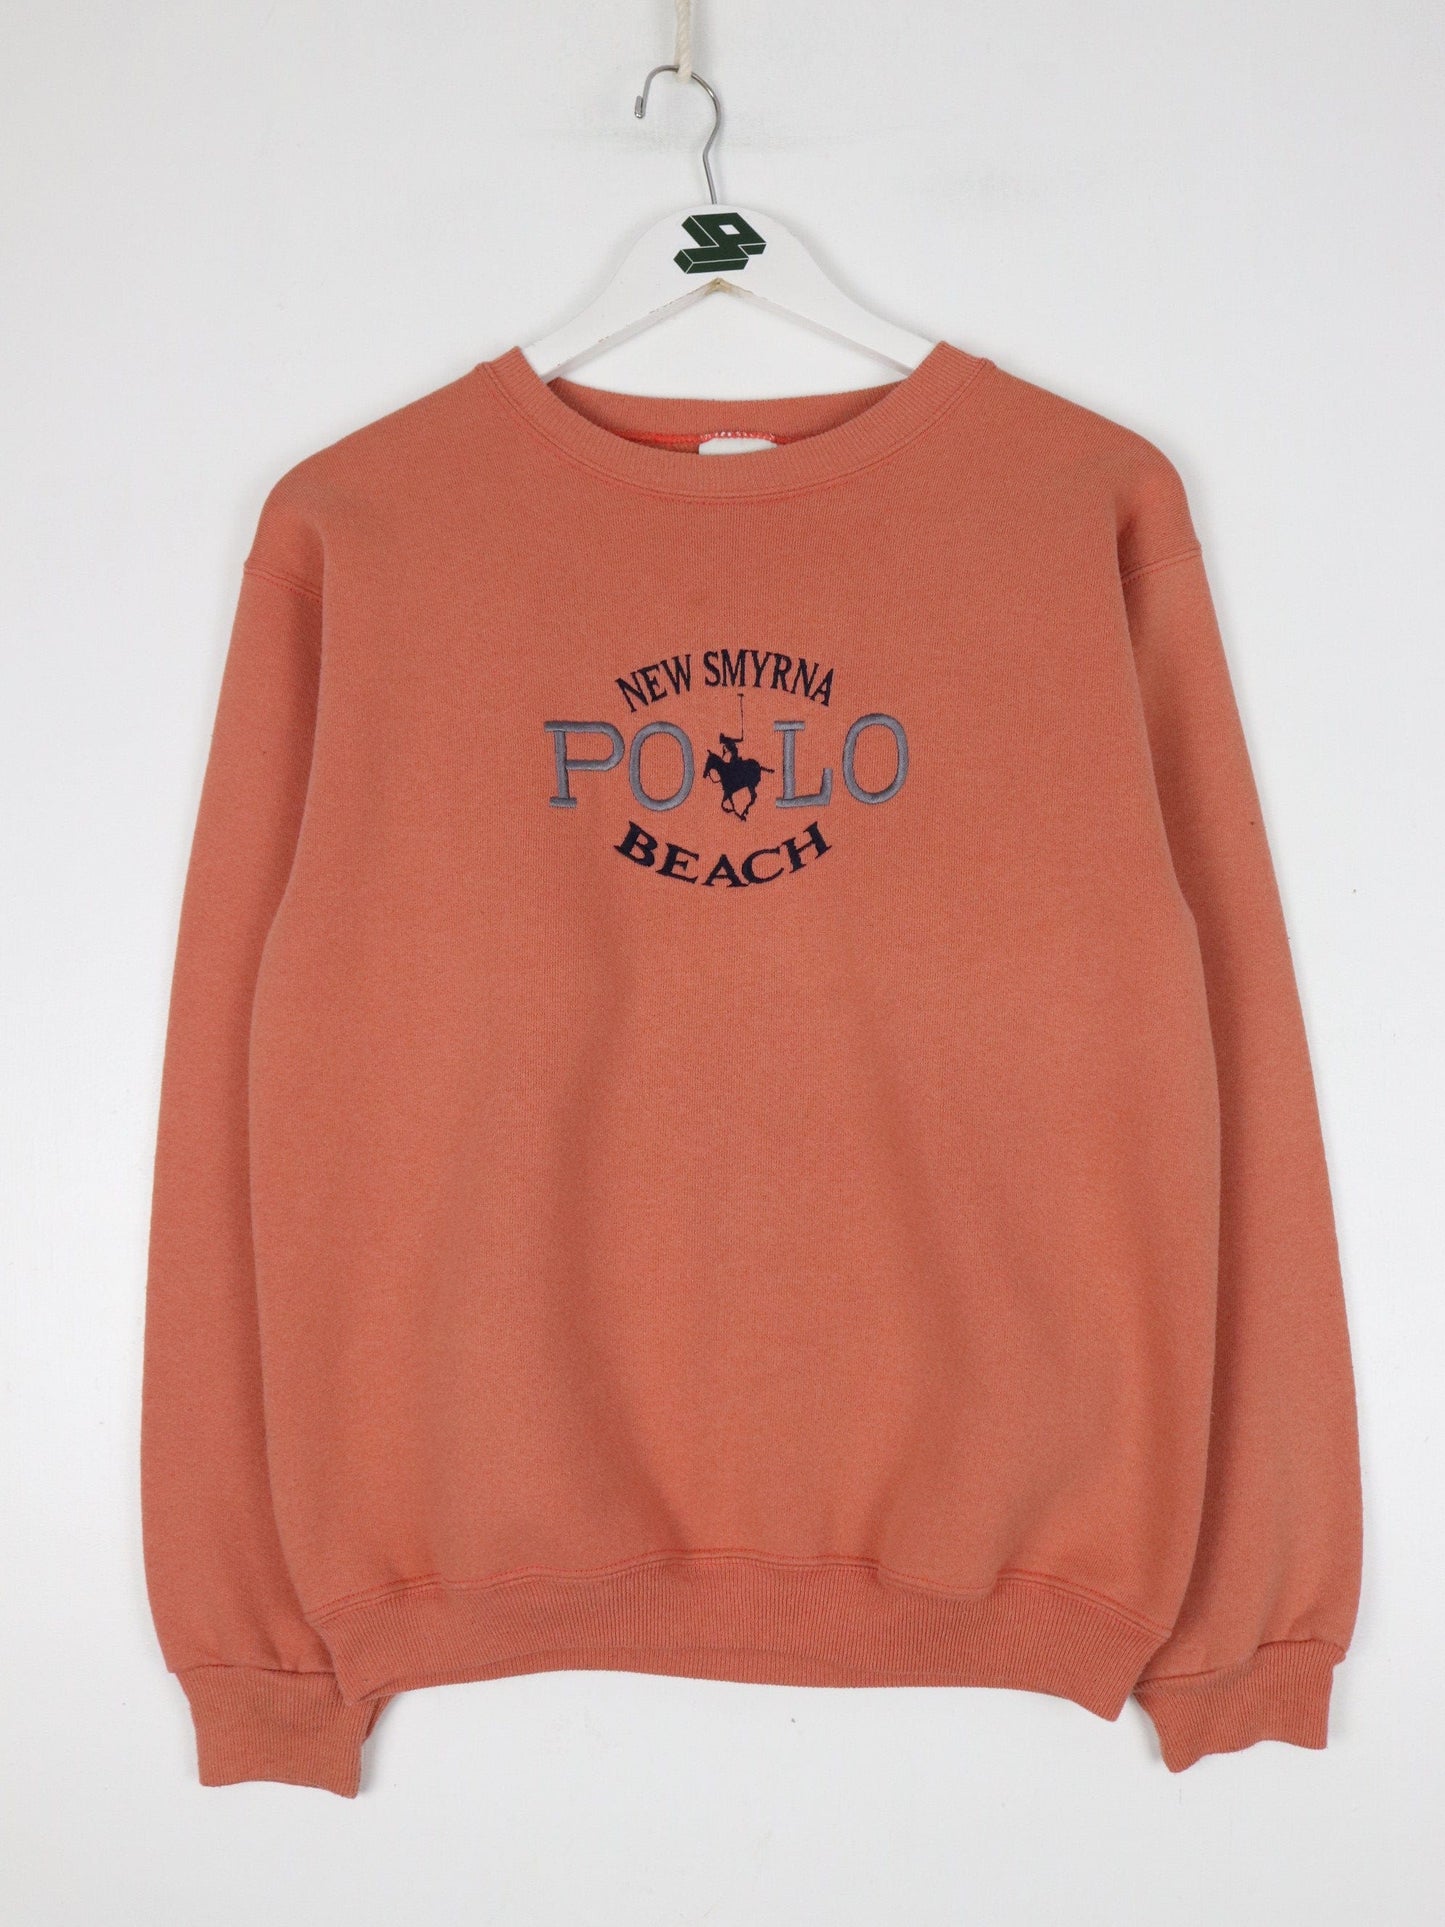 Other Sweatshirts & Hoodies Vintage New Smyrna Beach Polo Sweatshirt Mens Small Orange 90s